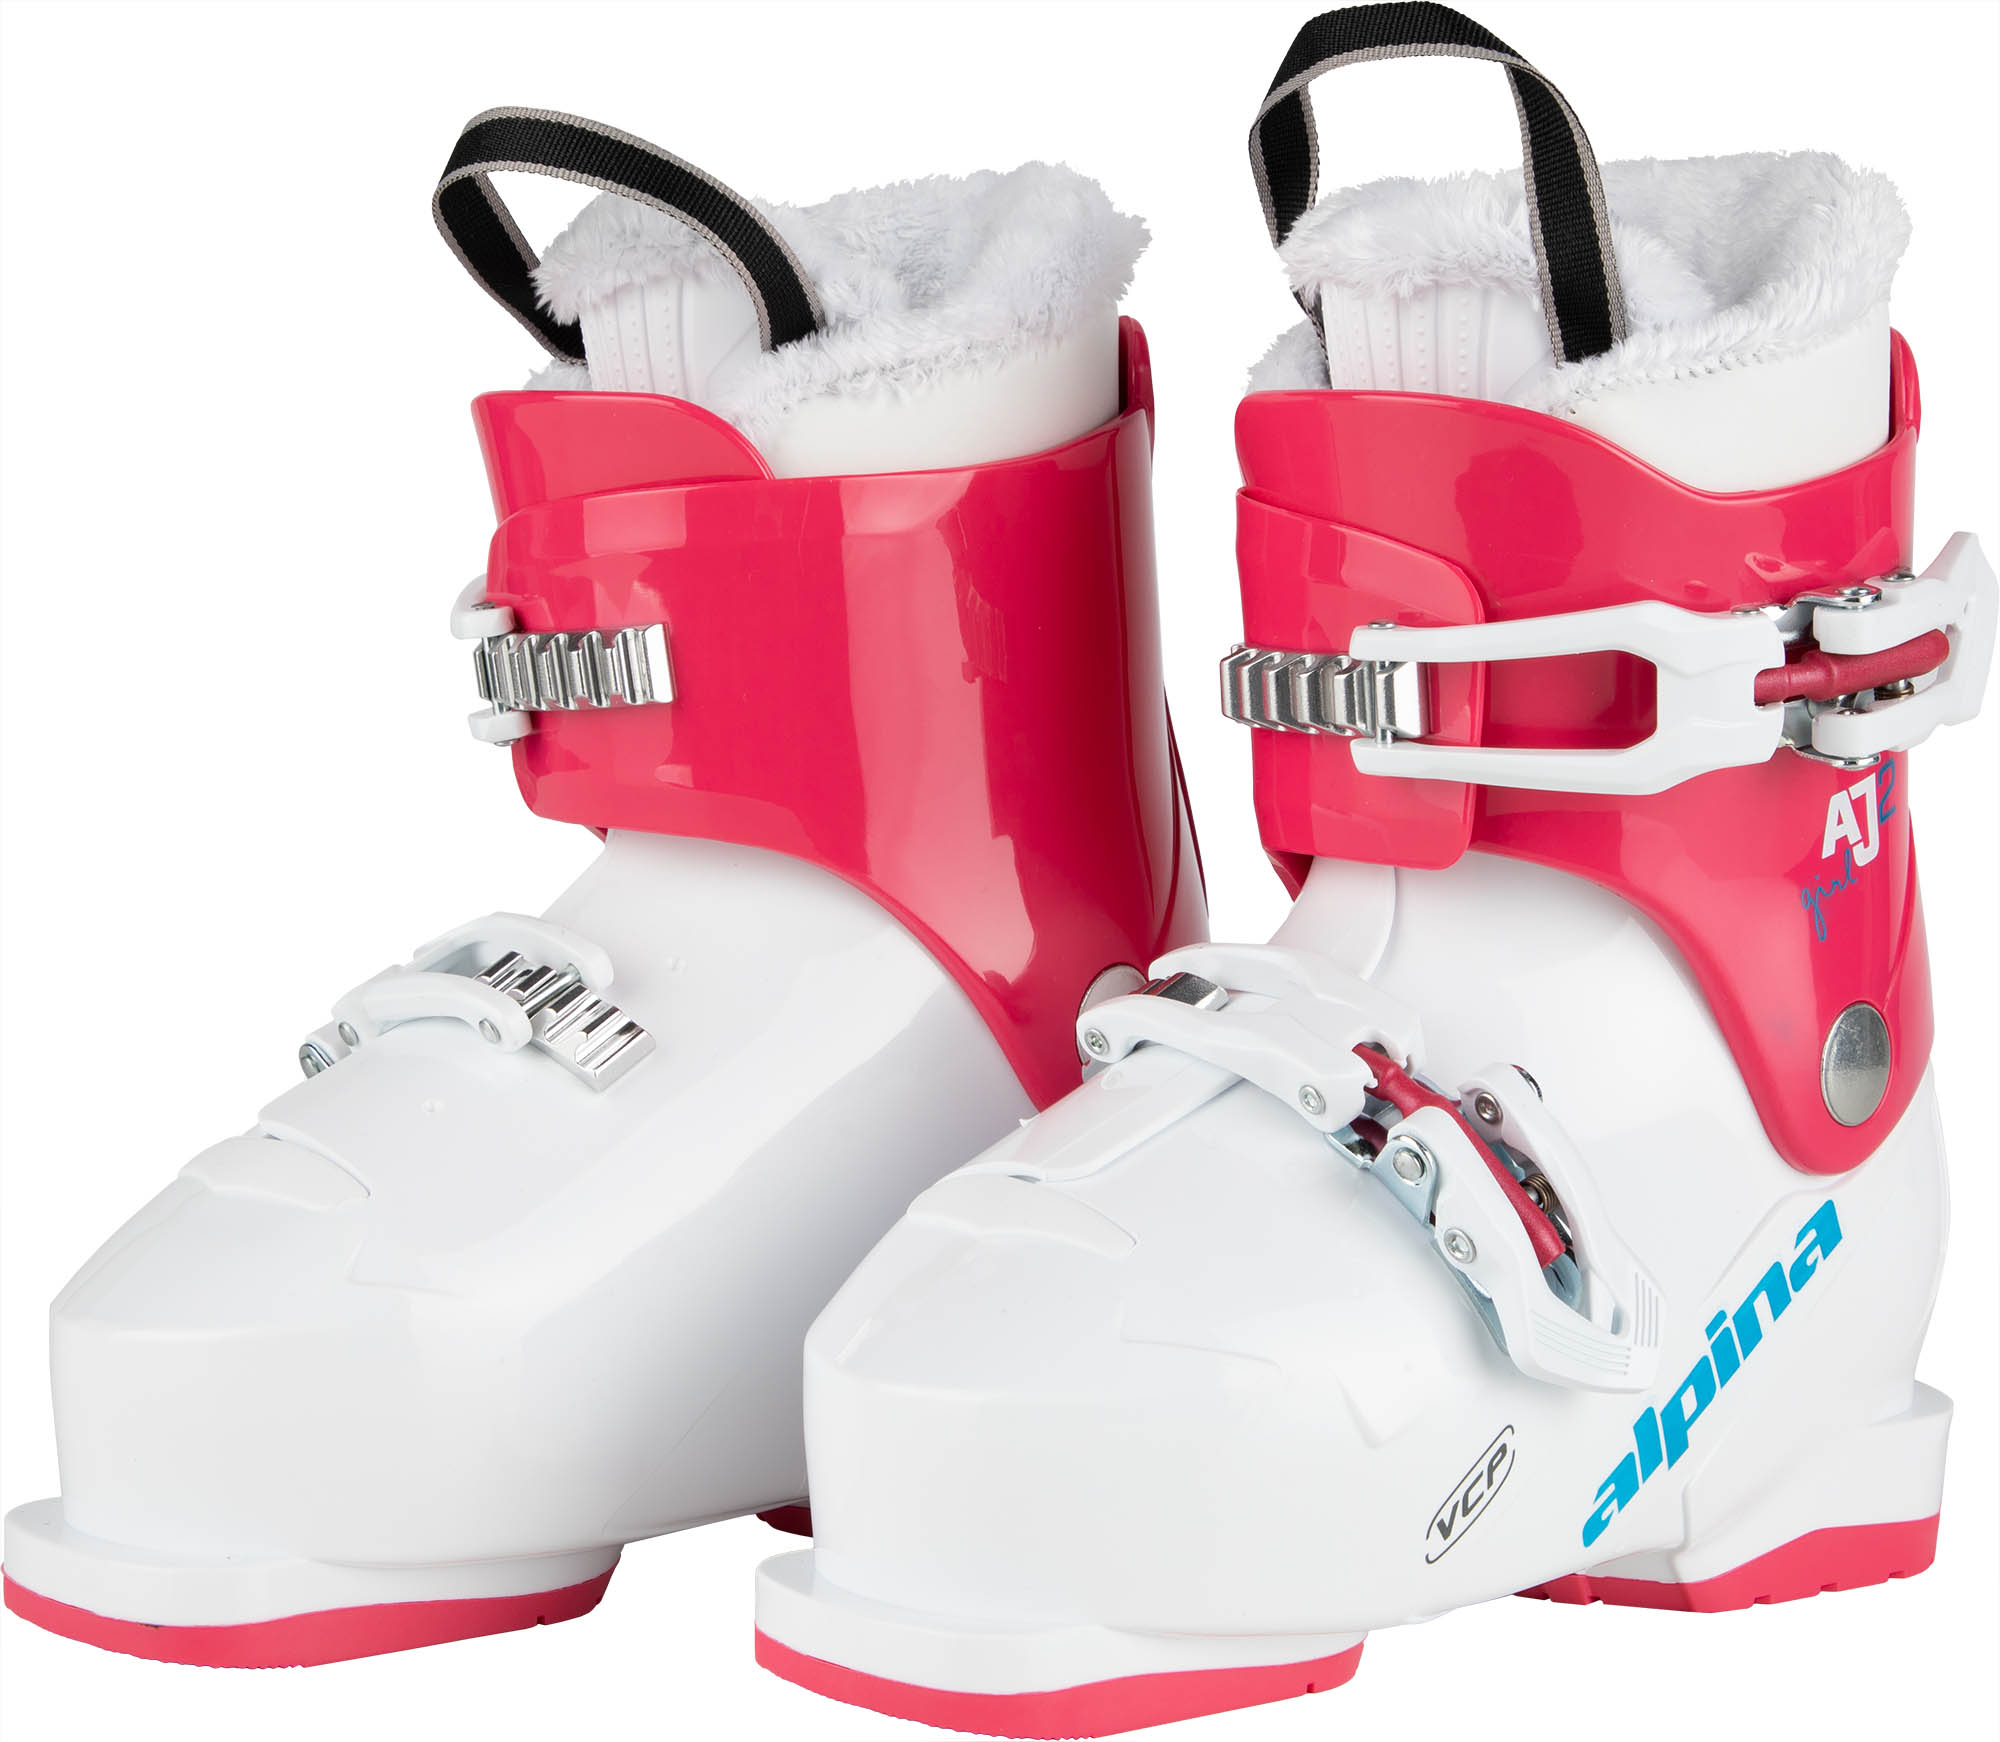 Girls’ Nordic ski boots